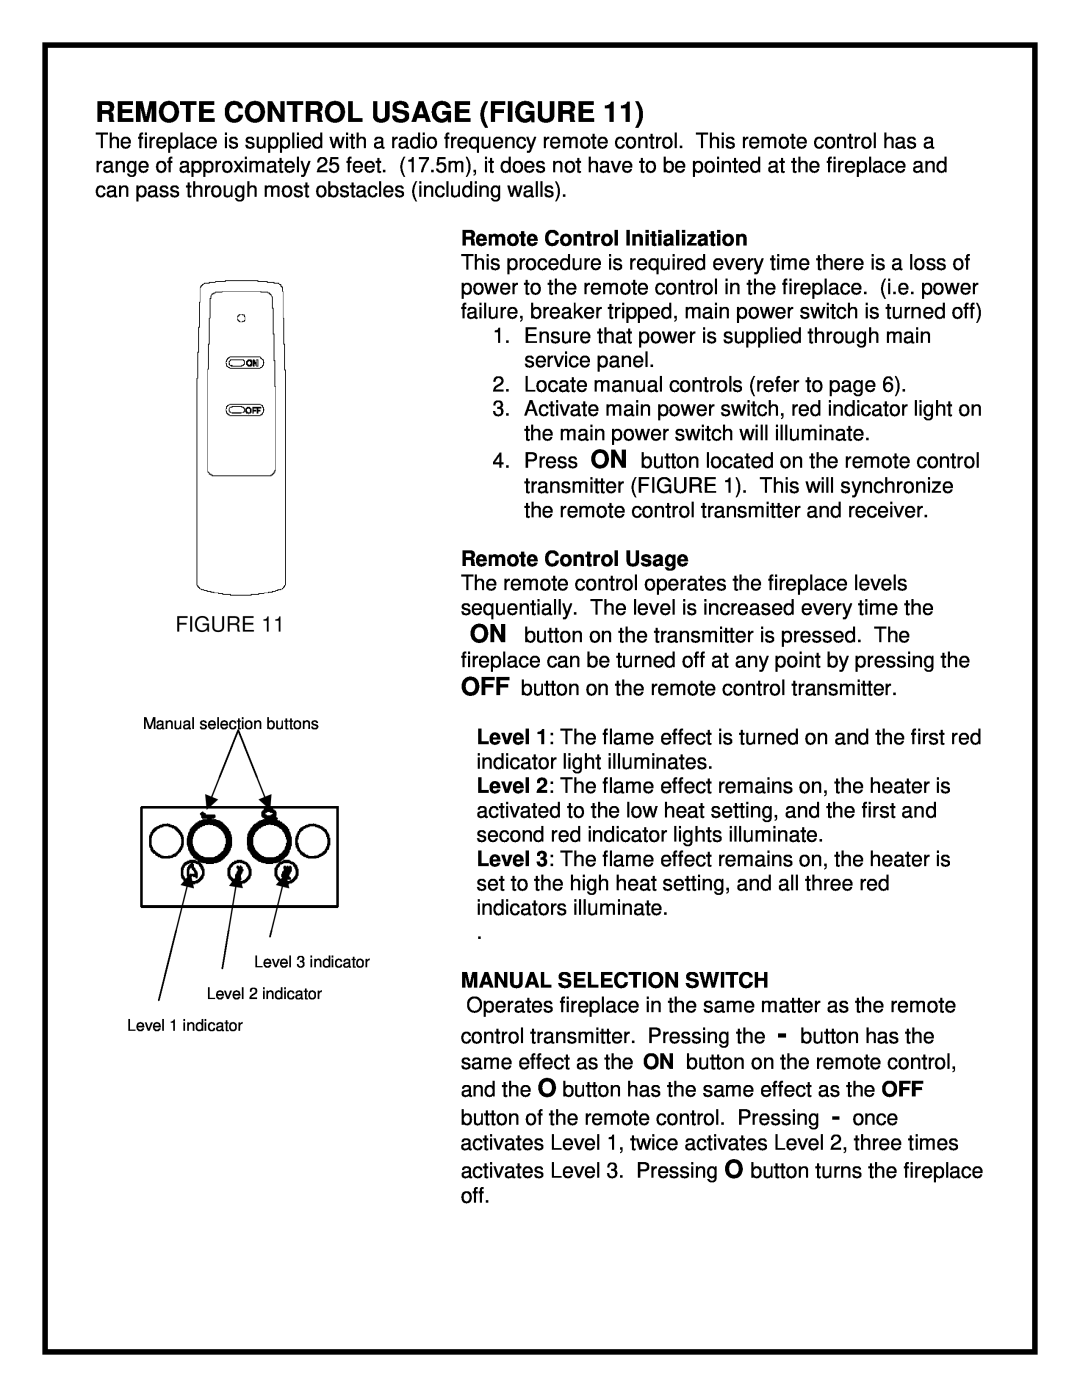 Dimplex EF3003-230 manual Remote Control Usage Figure, Remote Control Initialization, Manual Selection Switch 